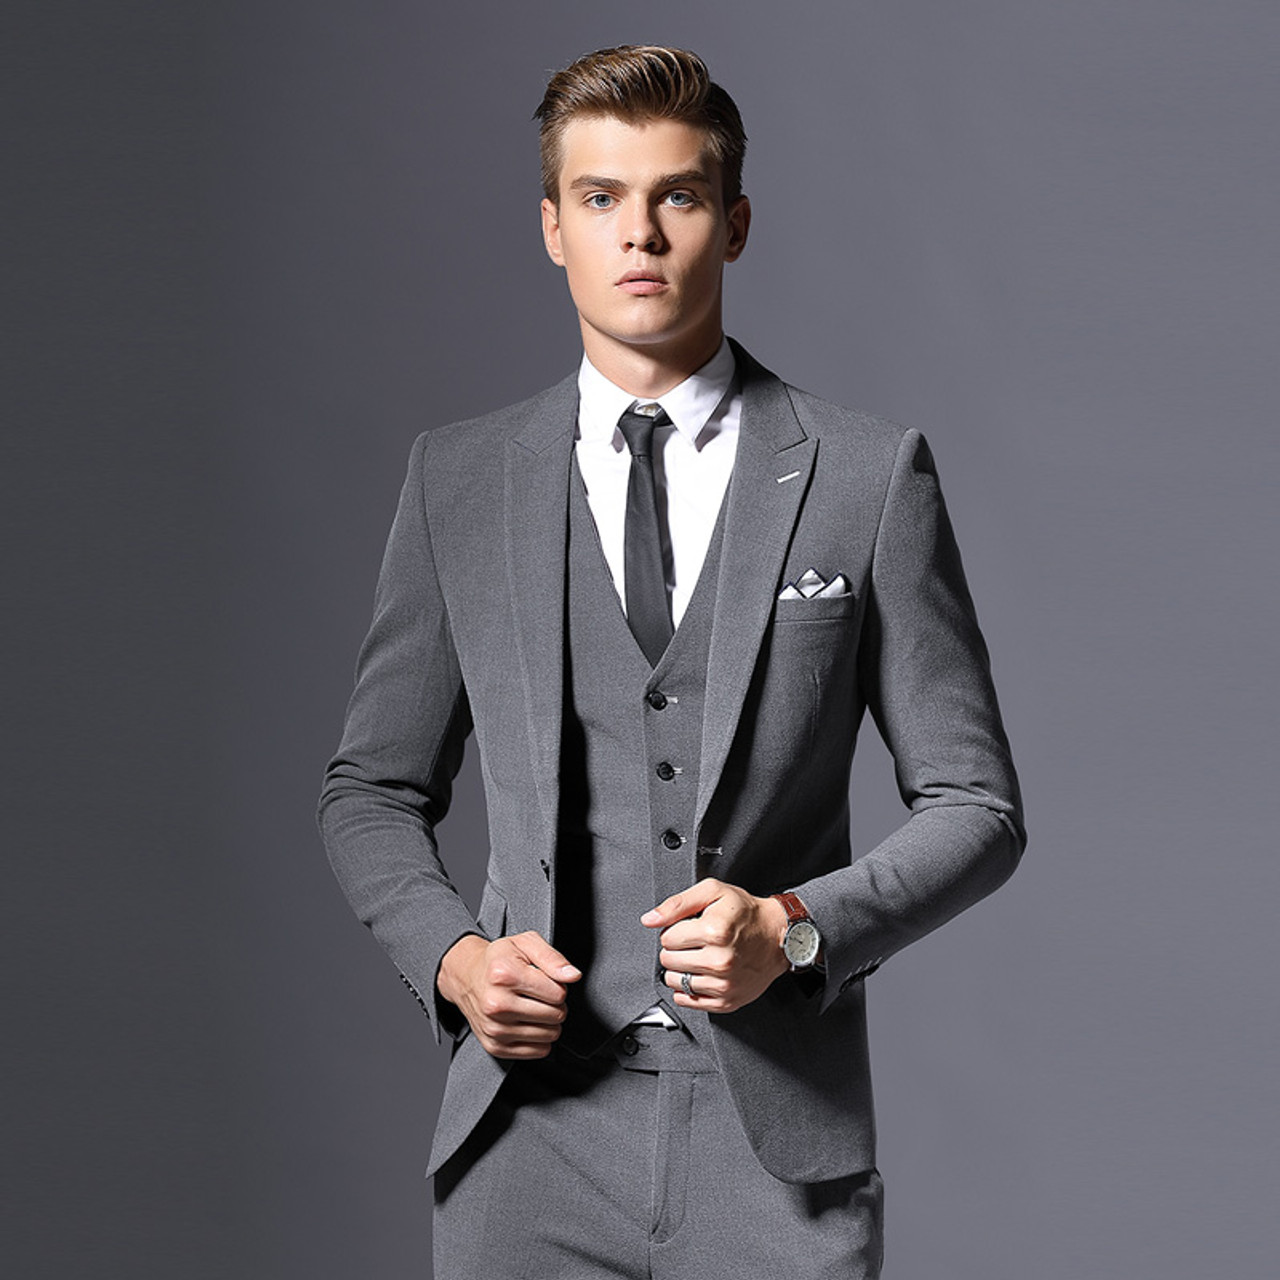 Slim Fit Coat Suit For Men - Mwxsd Brand Men S Casual Slim Fit Blazer ...